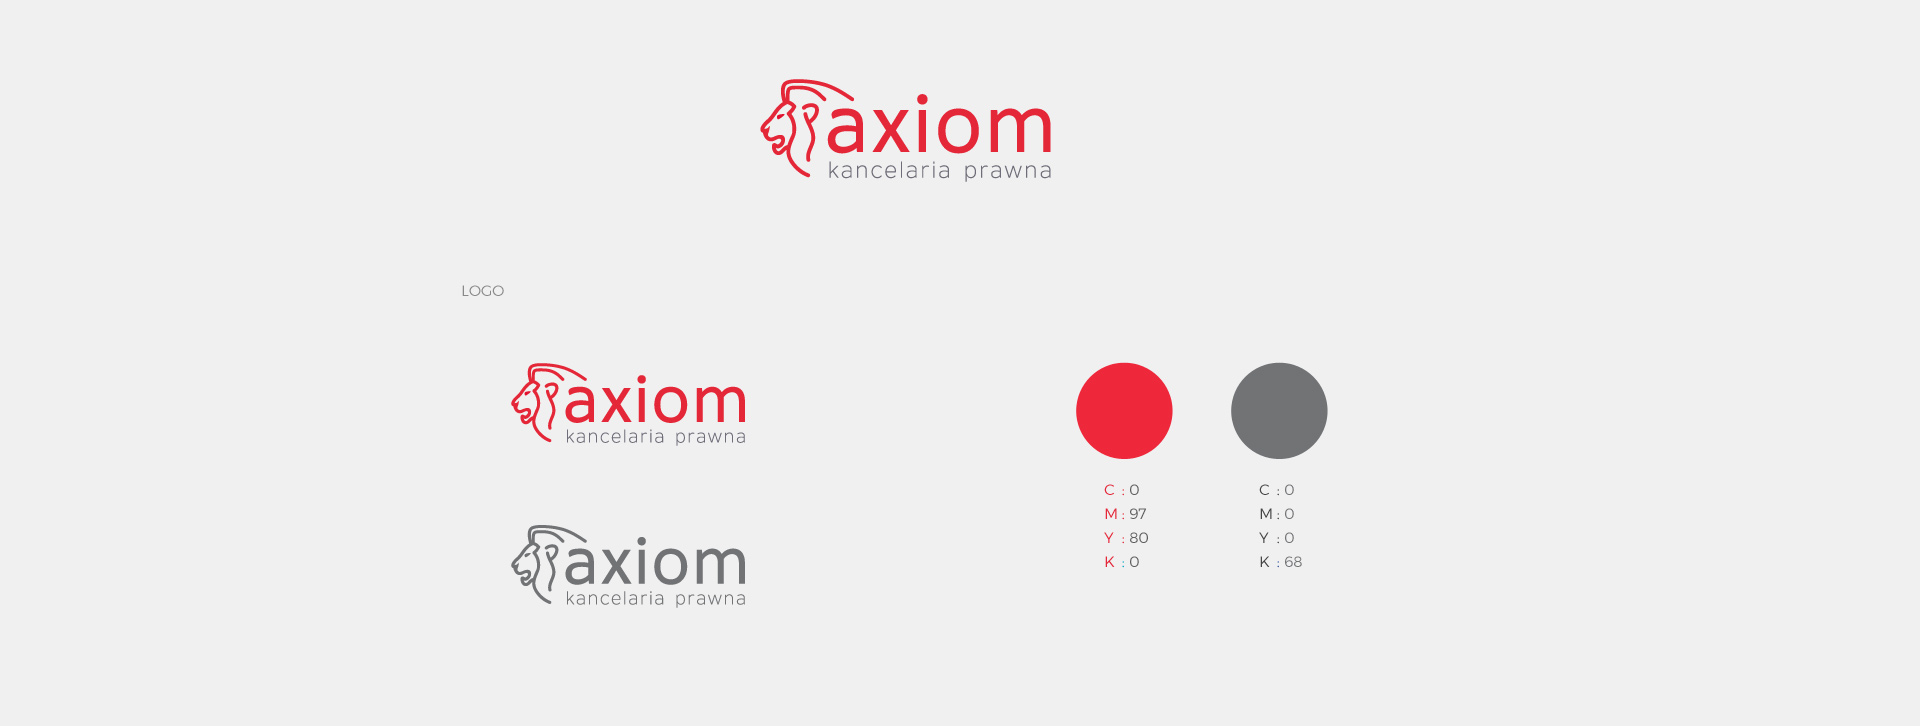 Axiom - Realizacja - Agencja ROXART